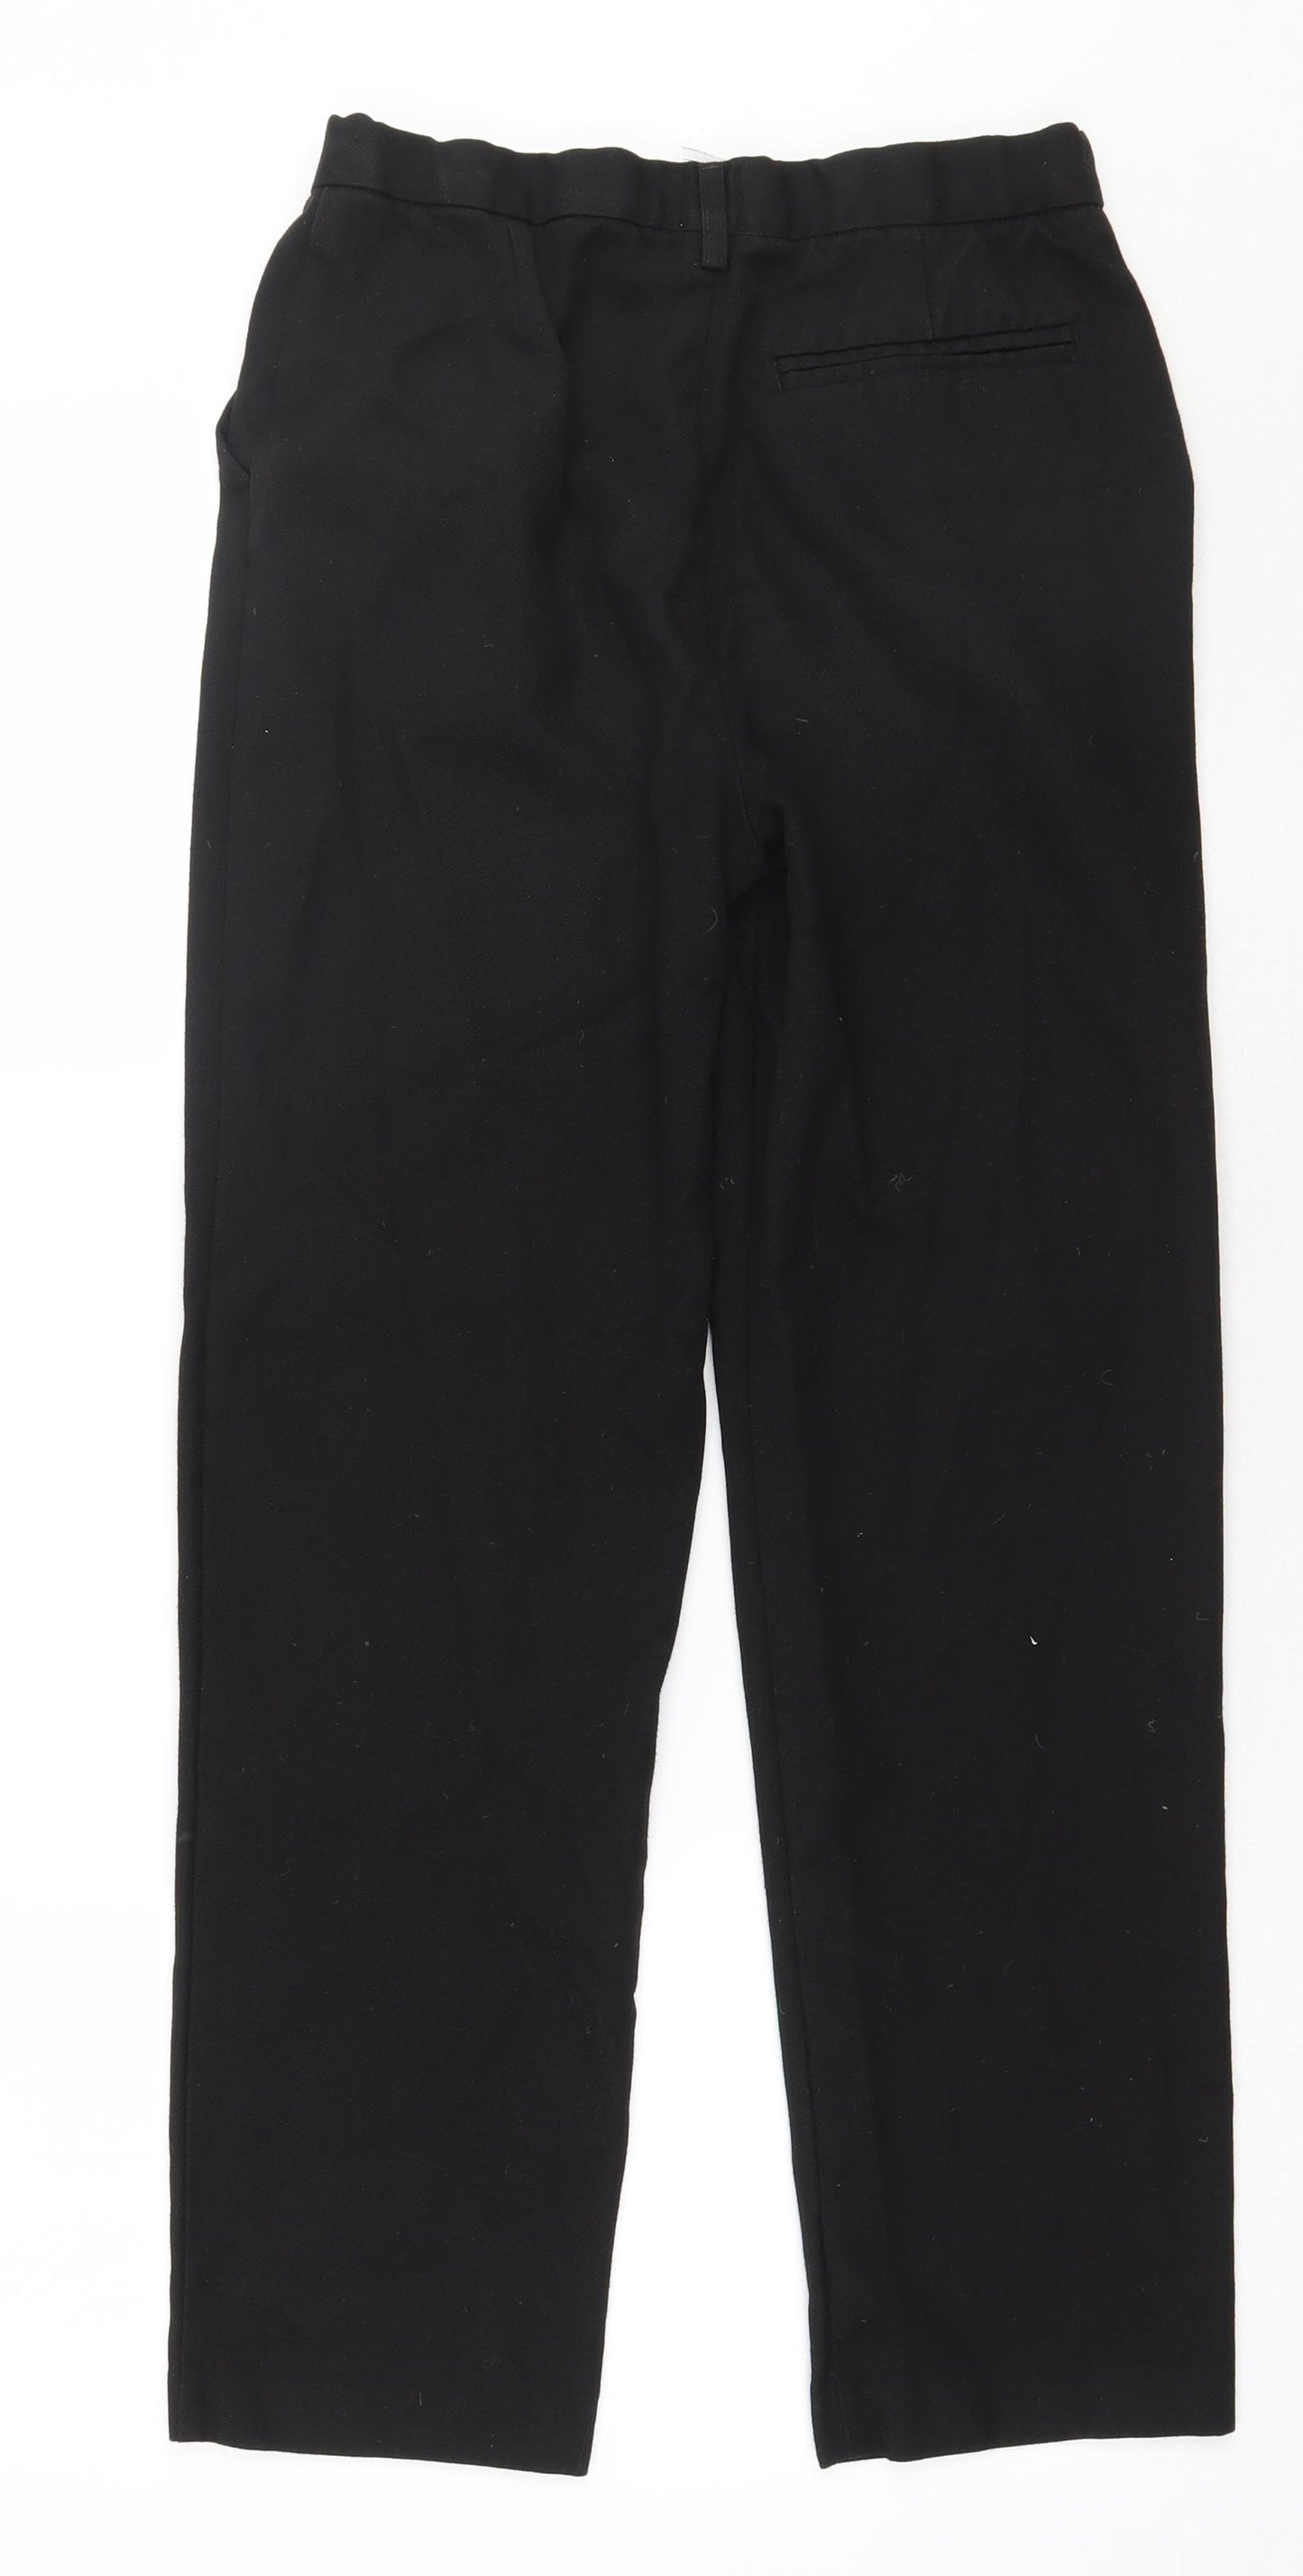 John Lewis Boys Black  Polyester Capri Trousers Size 14 Years  Regular Hook & Eye - school Wear